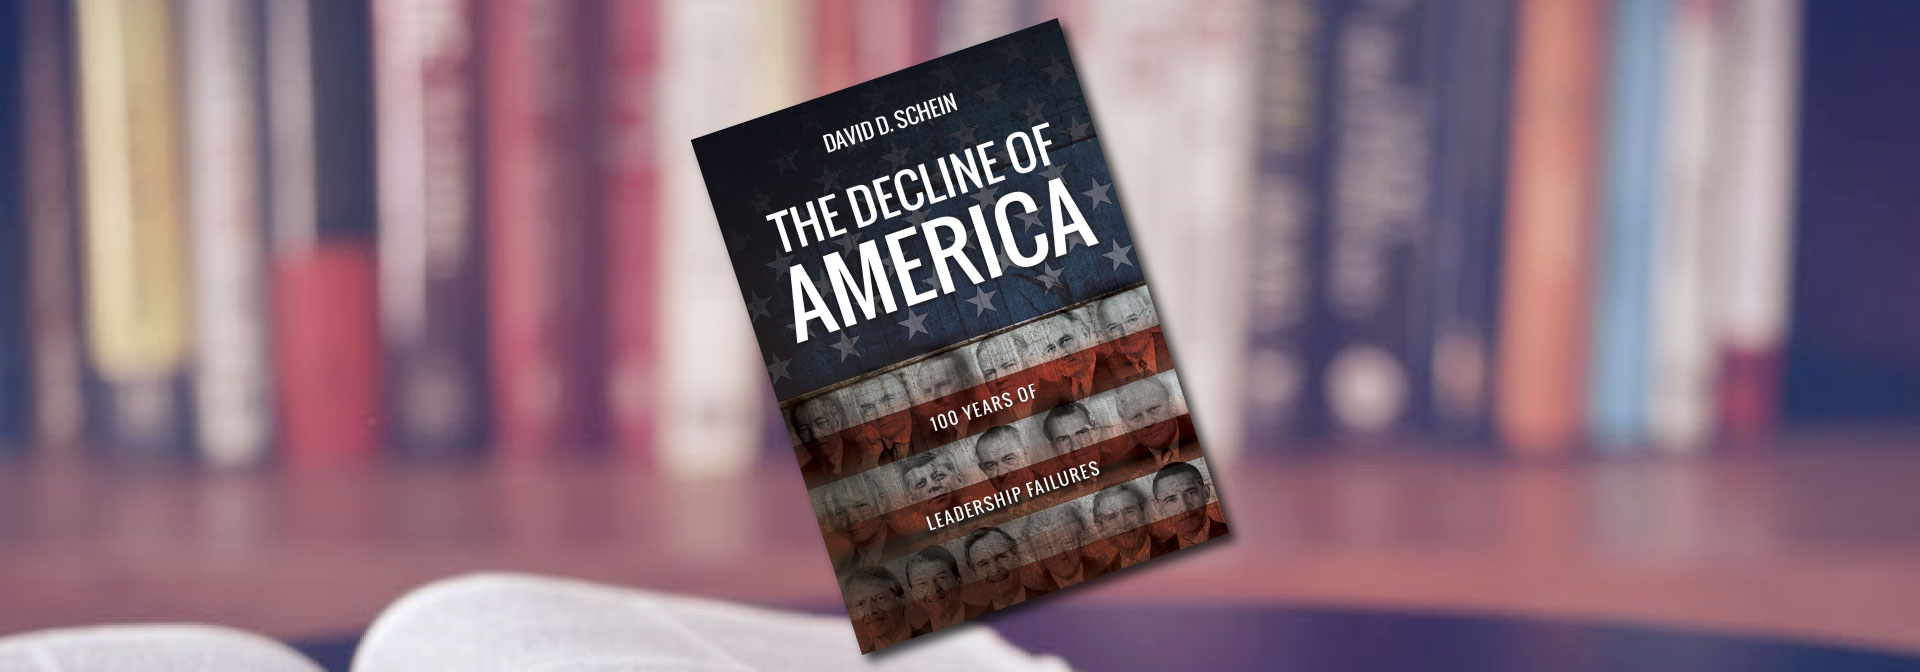 decline of america